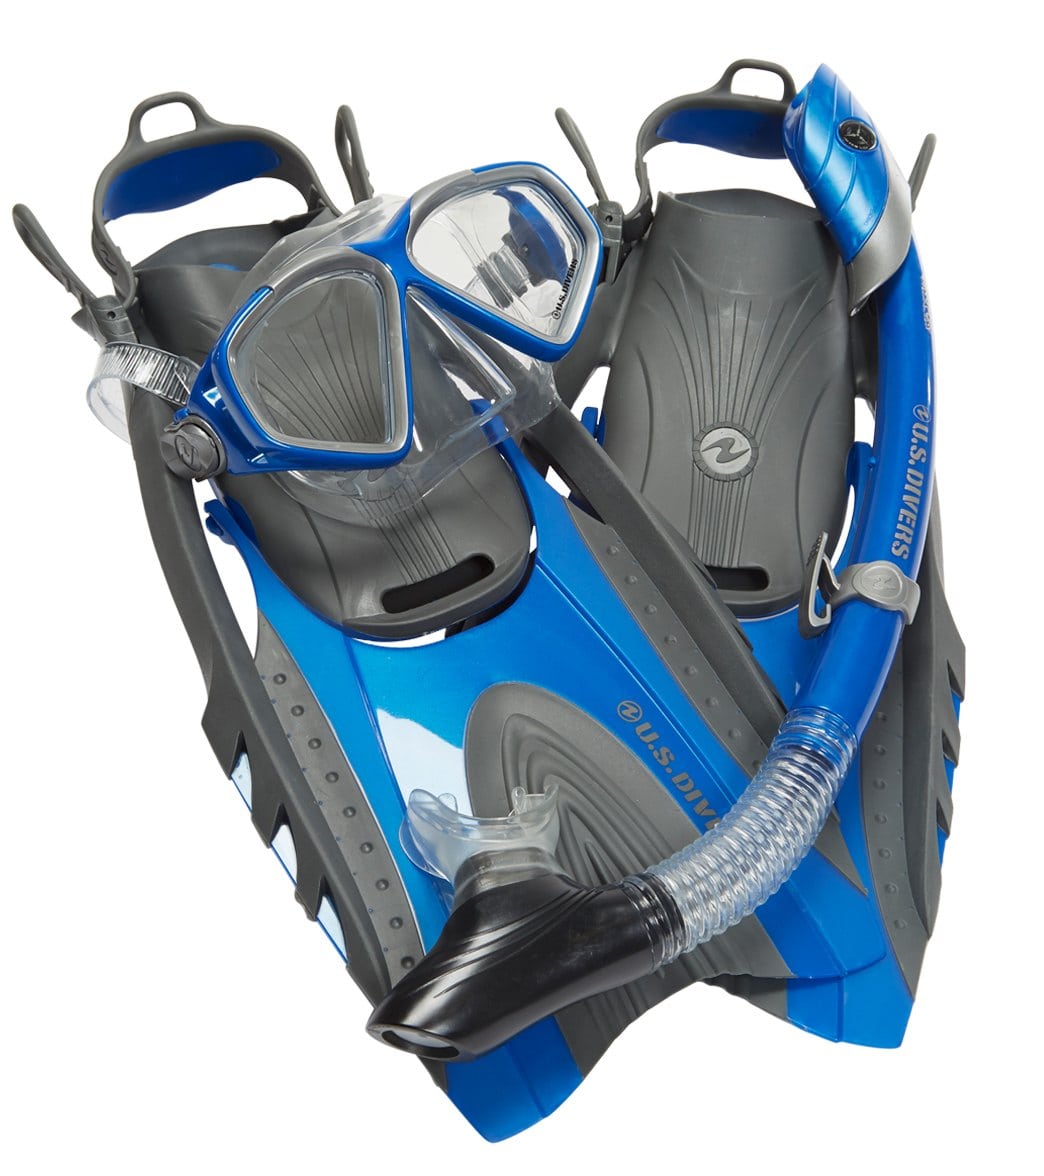 U.s. Divers Cozumel Mask/ Island Dry Snorkel/ Hingeflex Ii Fins/Gear Bag Set - Blue/Black L/Xl 9-13 - Swimoutlet.com